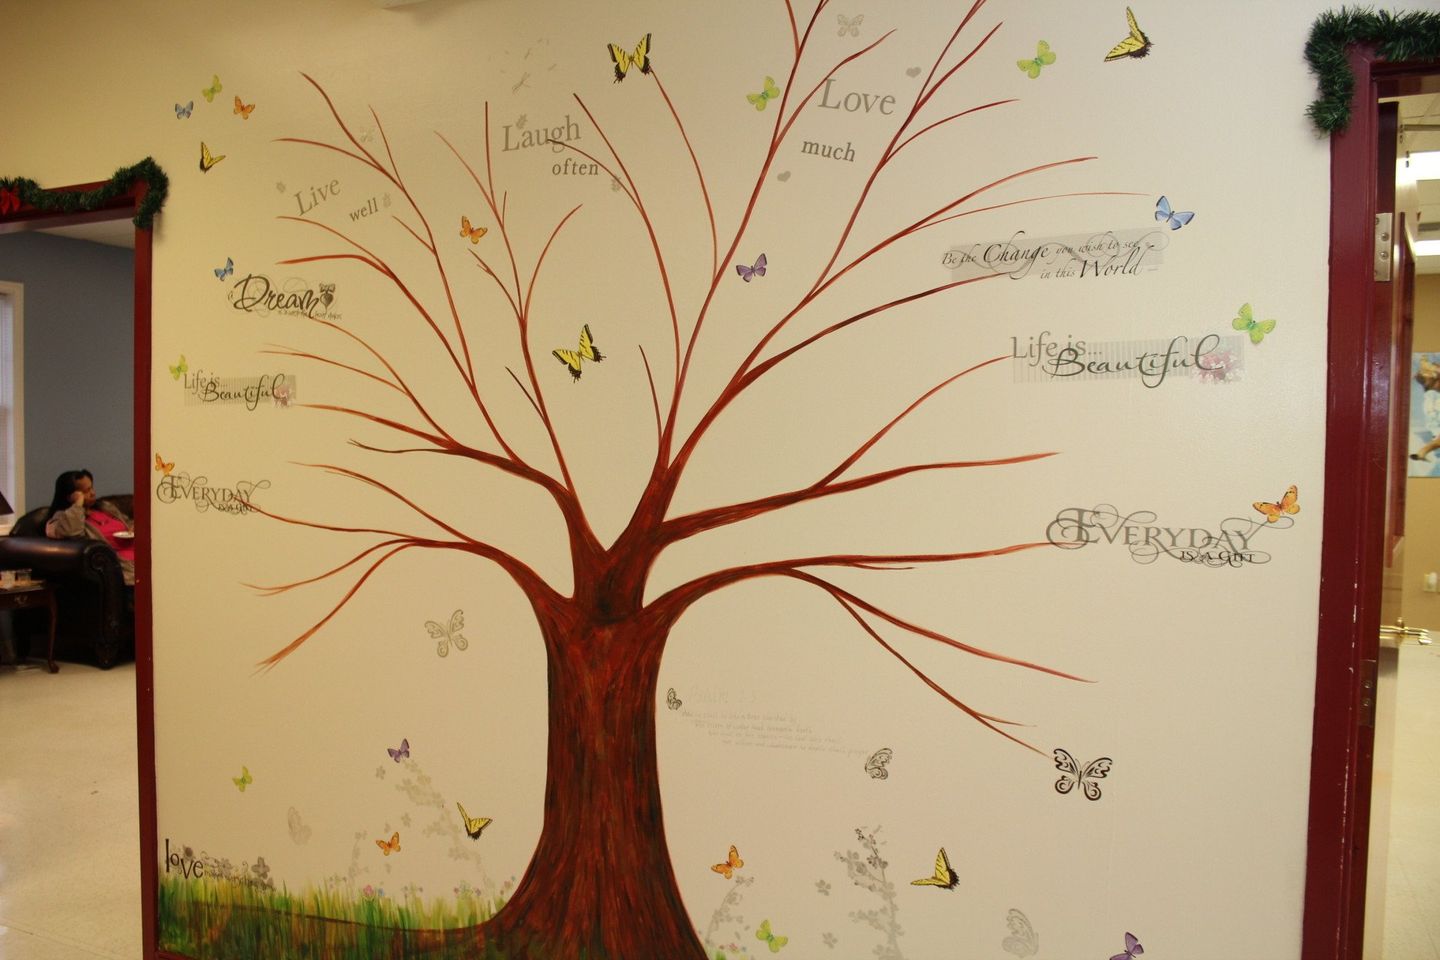 Virginia - Tree Painting on a Wall in Richmond, VA